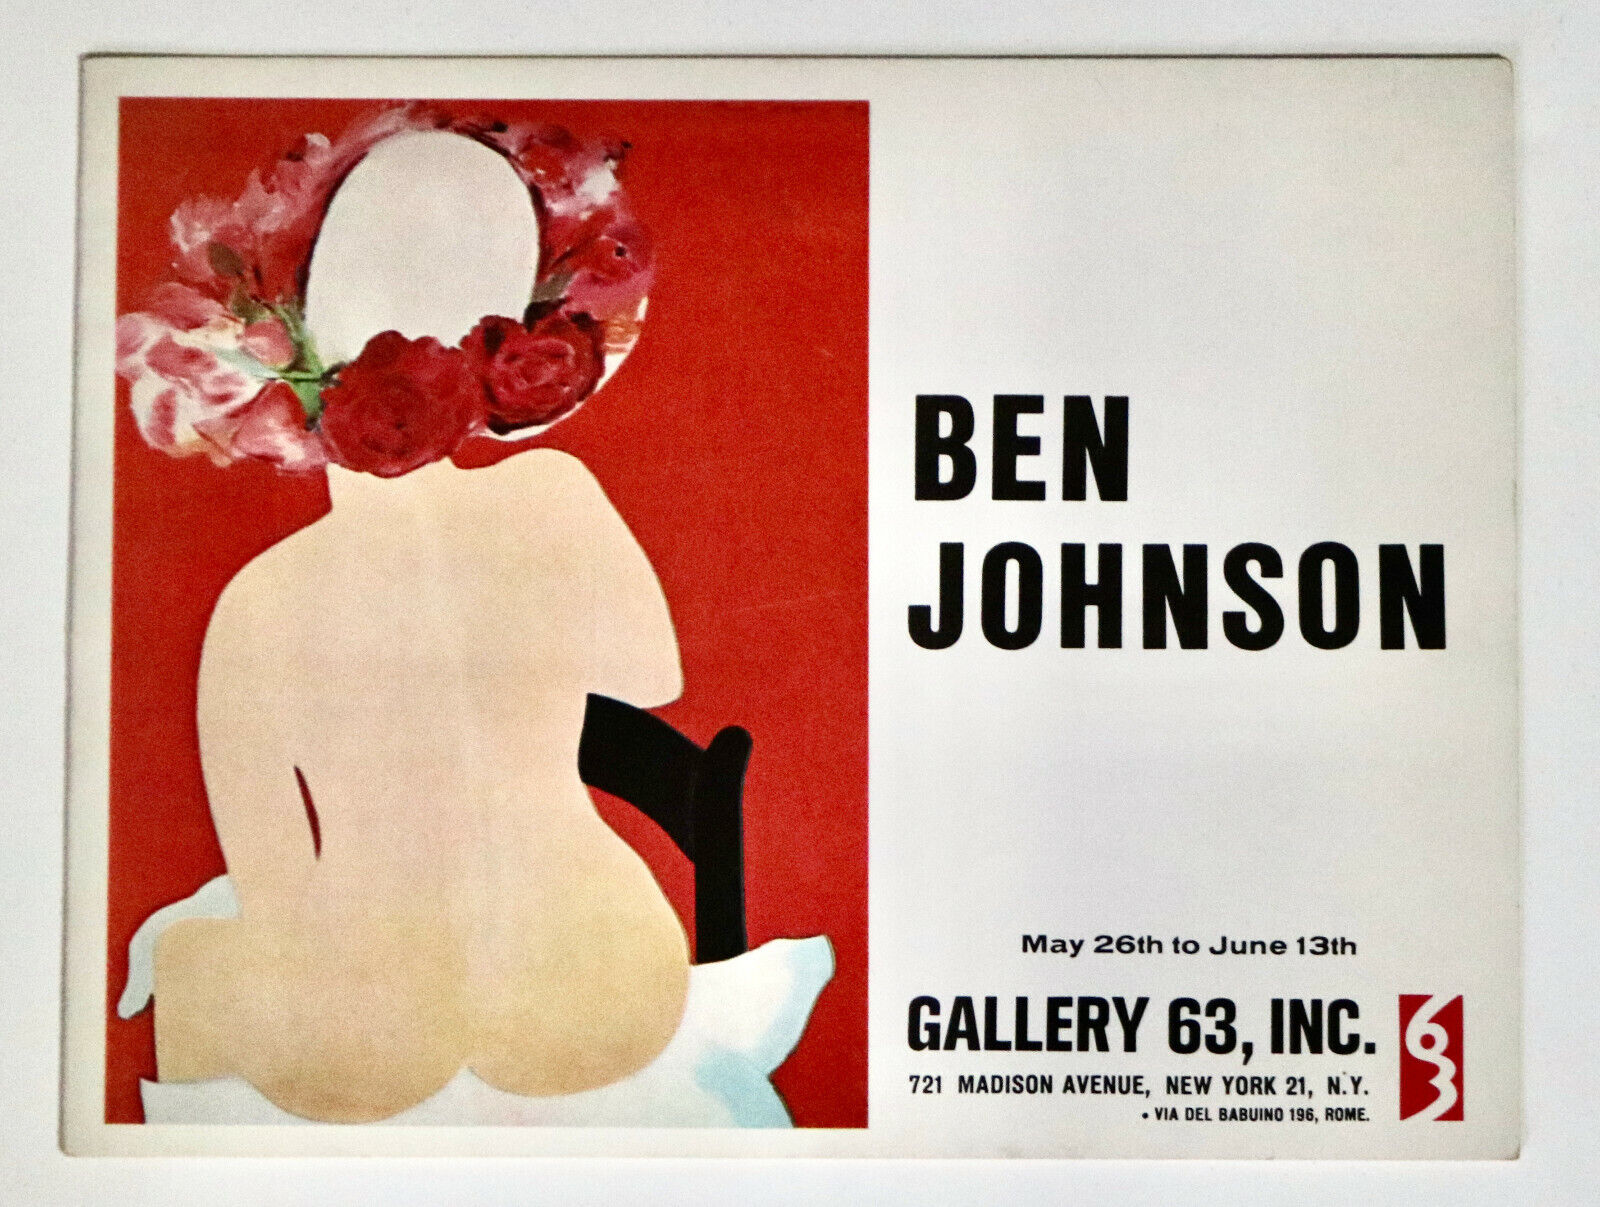 BEN JOHNSON Gallery 63 NYC exhibit brochure 1964 abstract female nudes